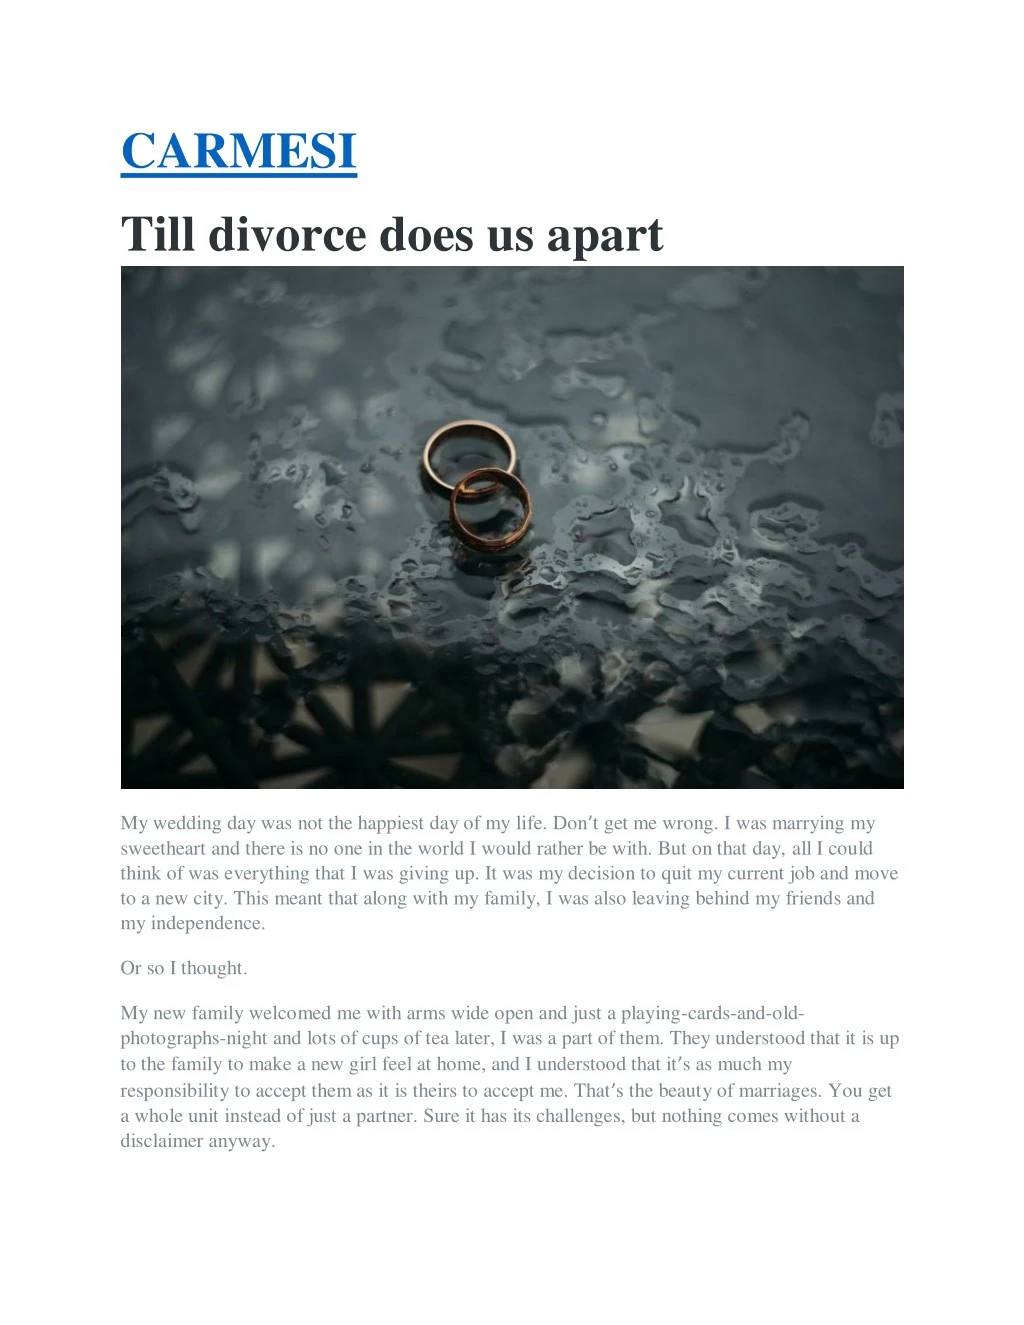 carmesi till divorce does us apart